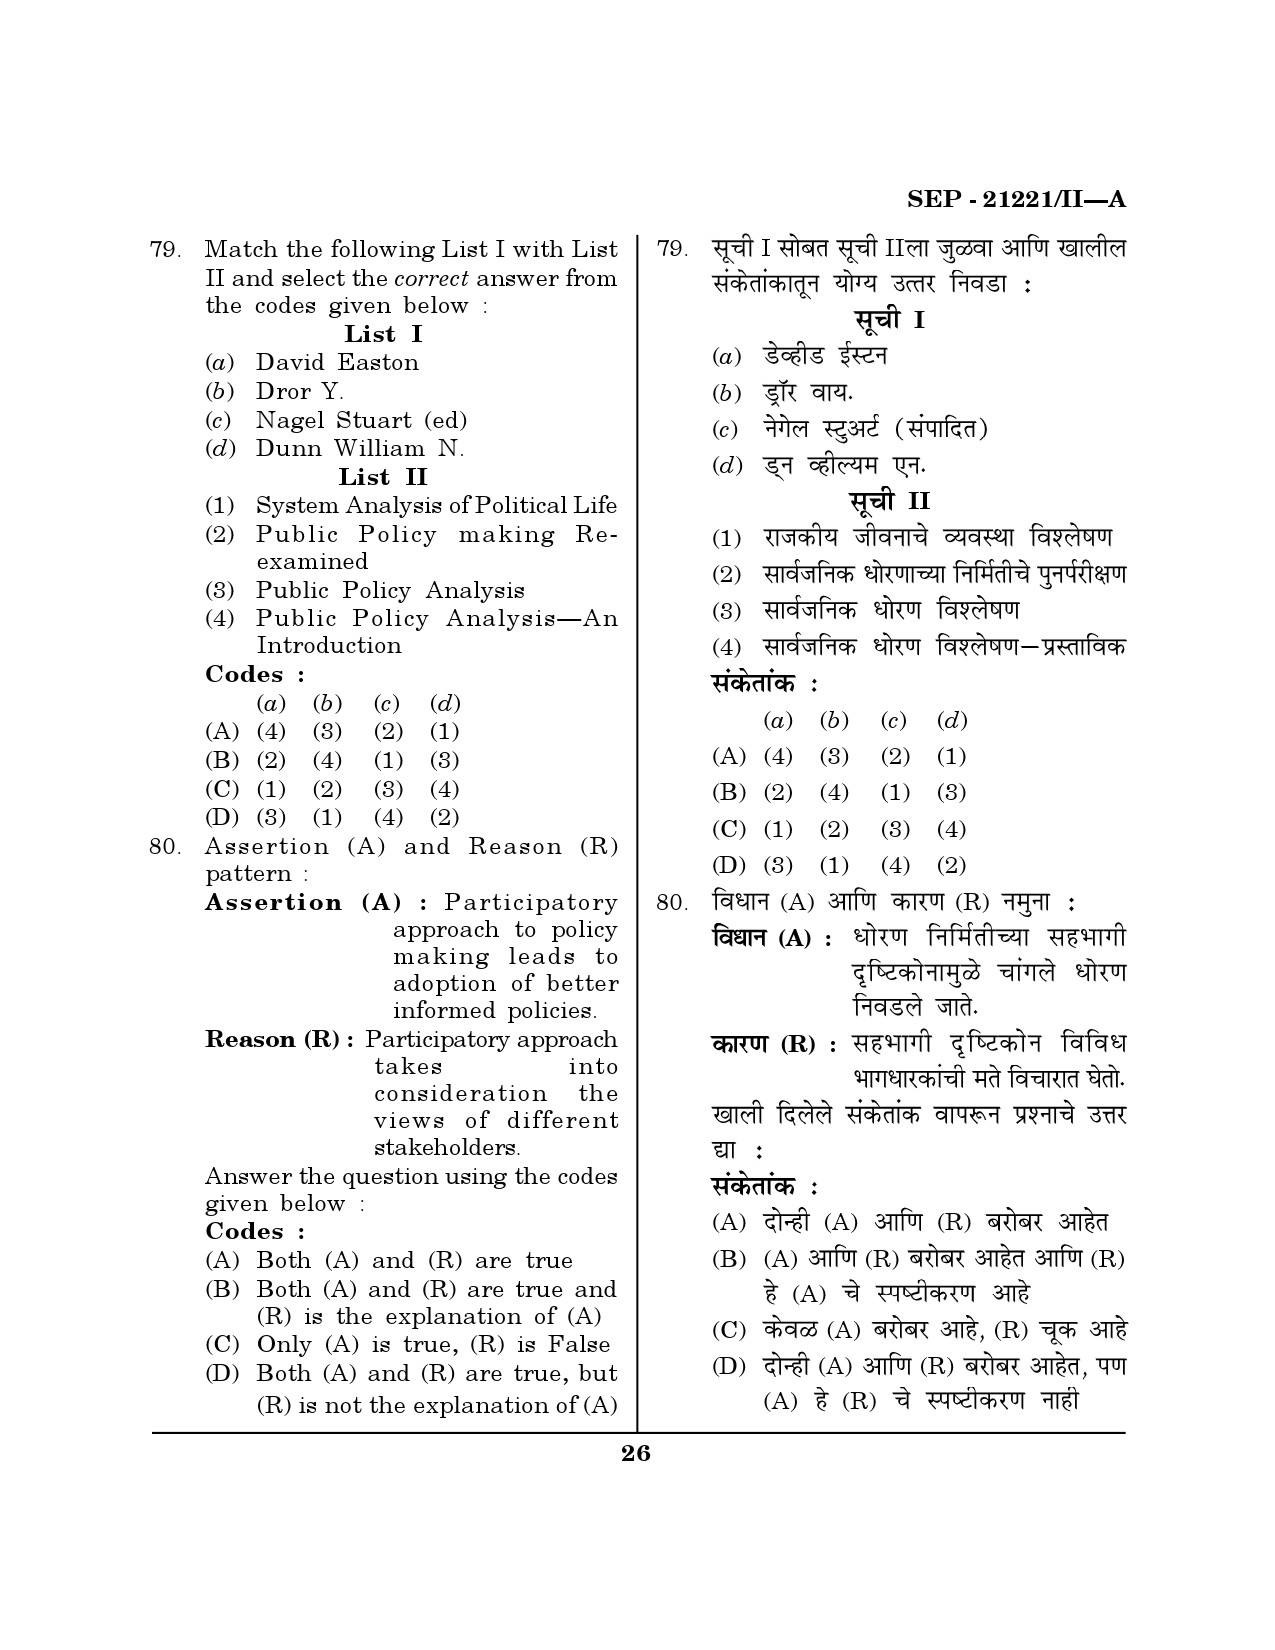 Maharashtra SET Public Administration Exam Question Paper September 2021 25